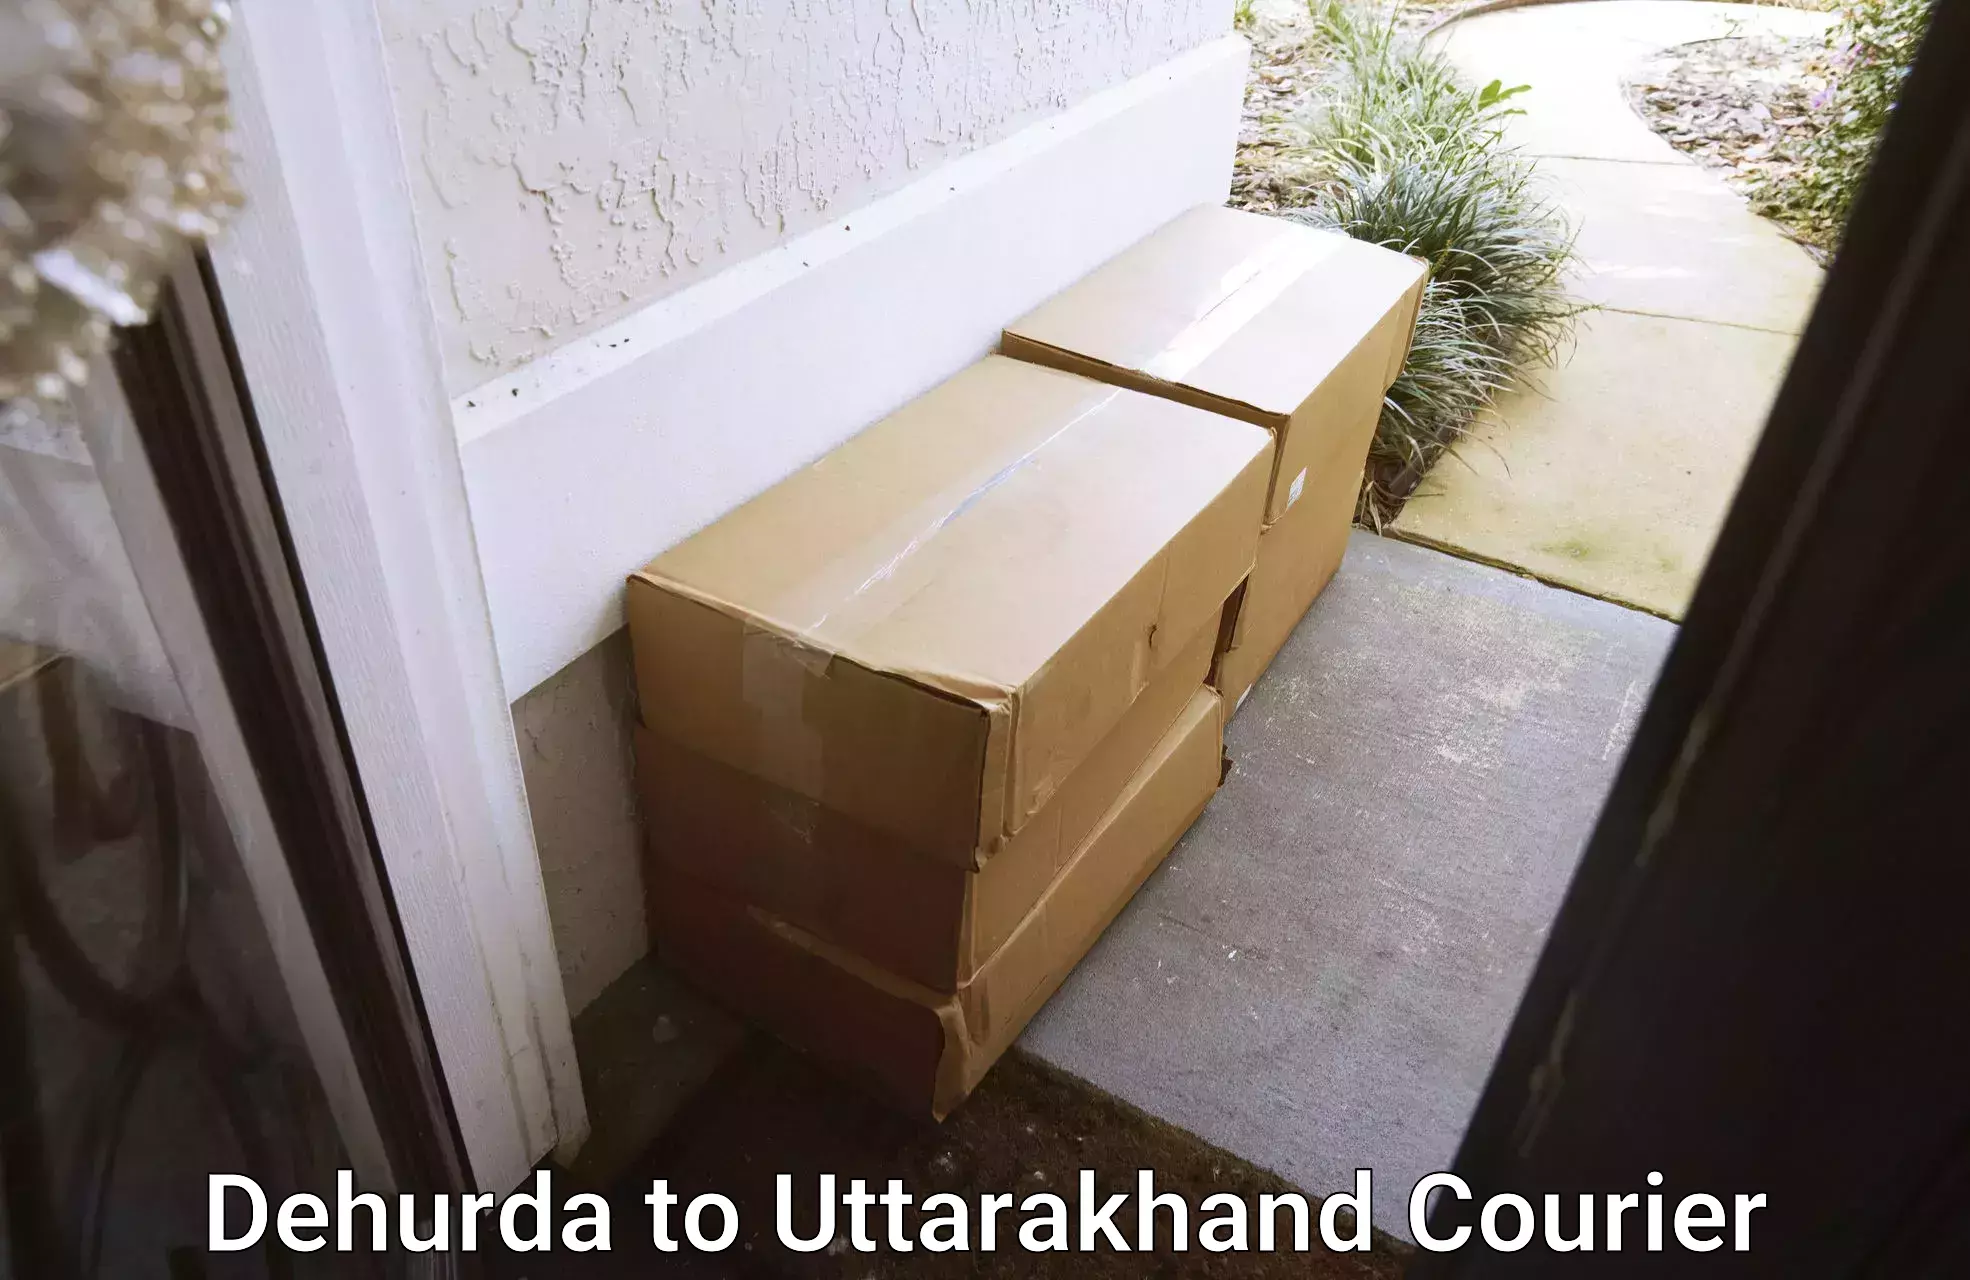 Courier service efficiency Dehurda to Rishikesh